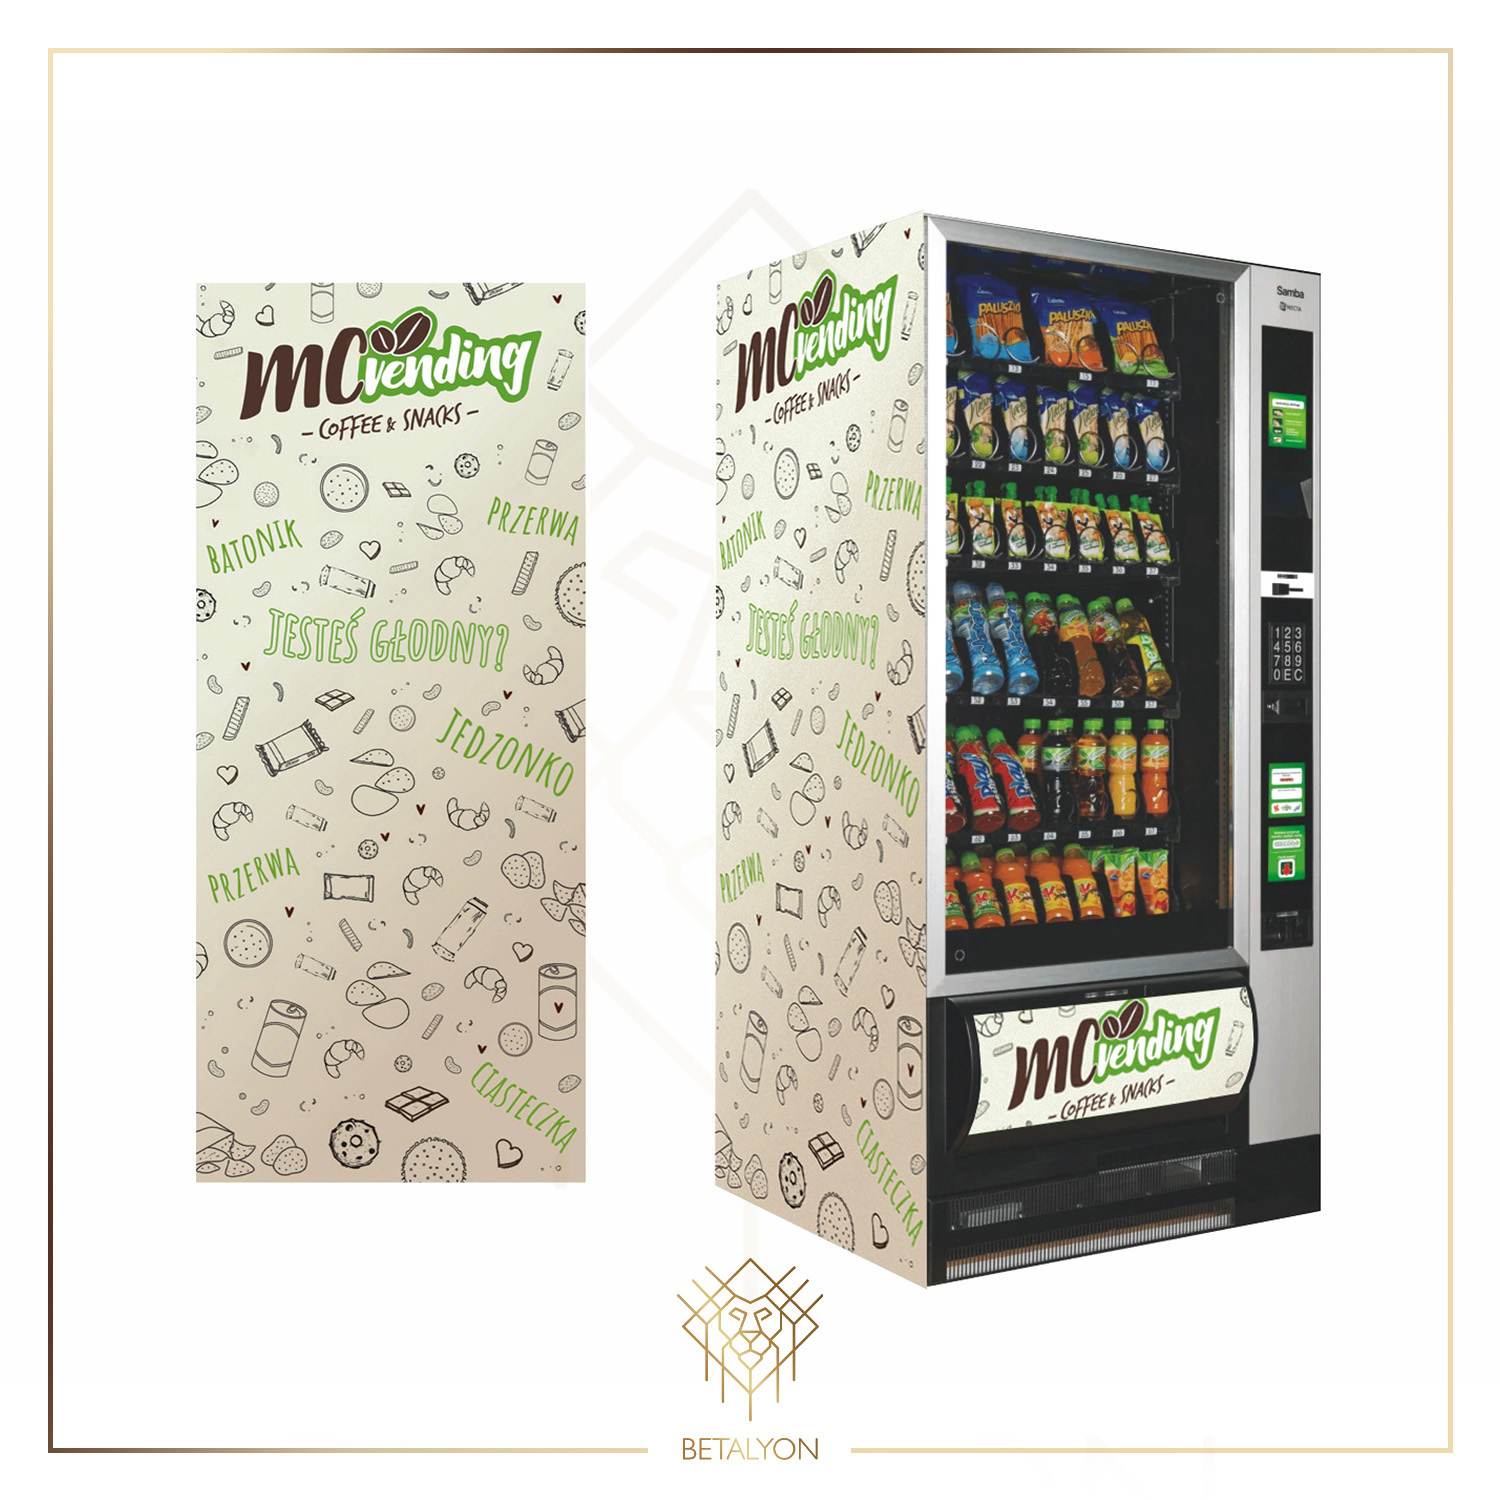 MC Vending - brand maszyn vendingowych